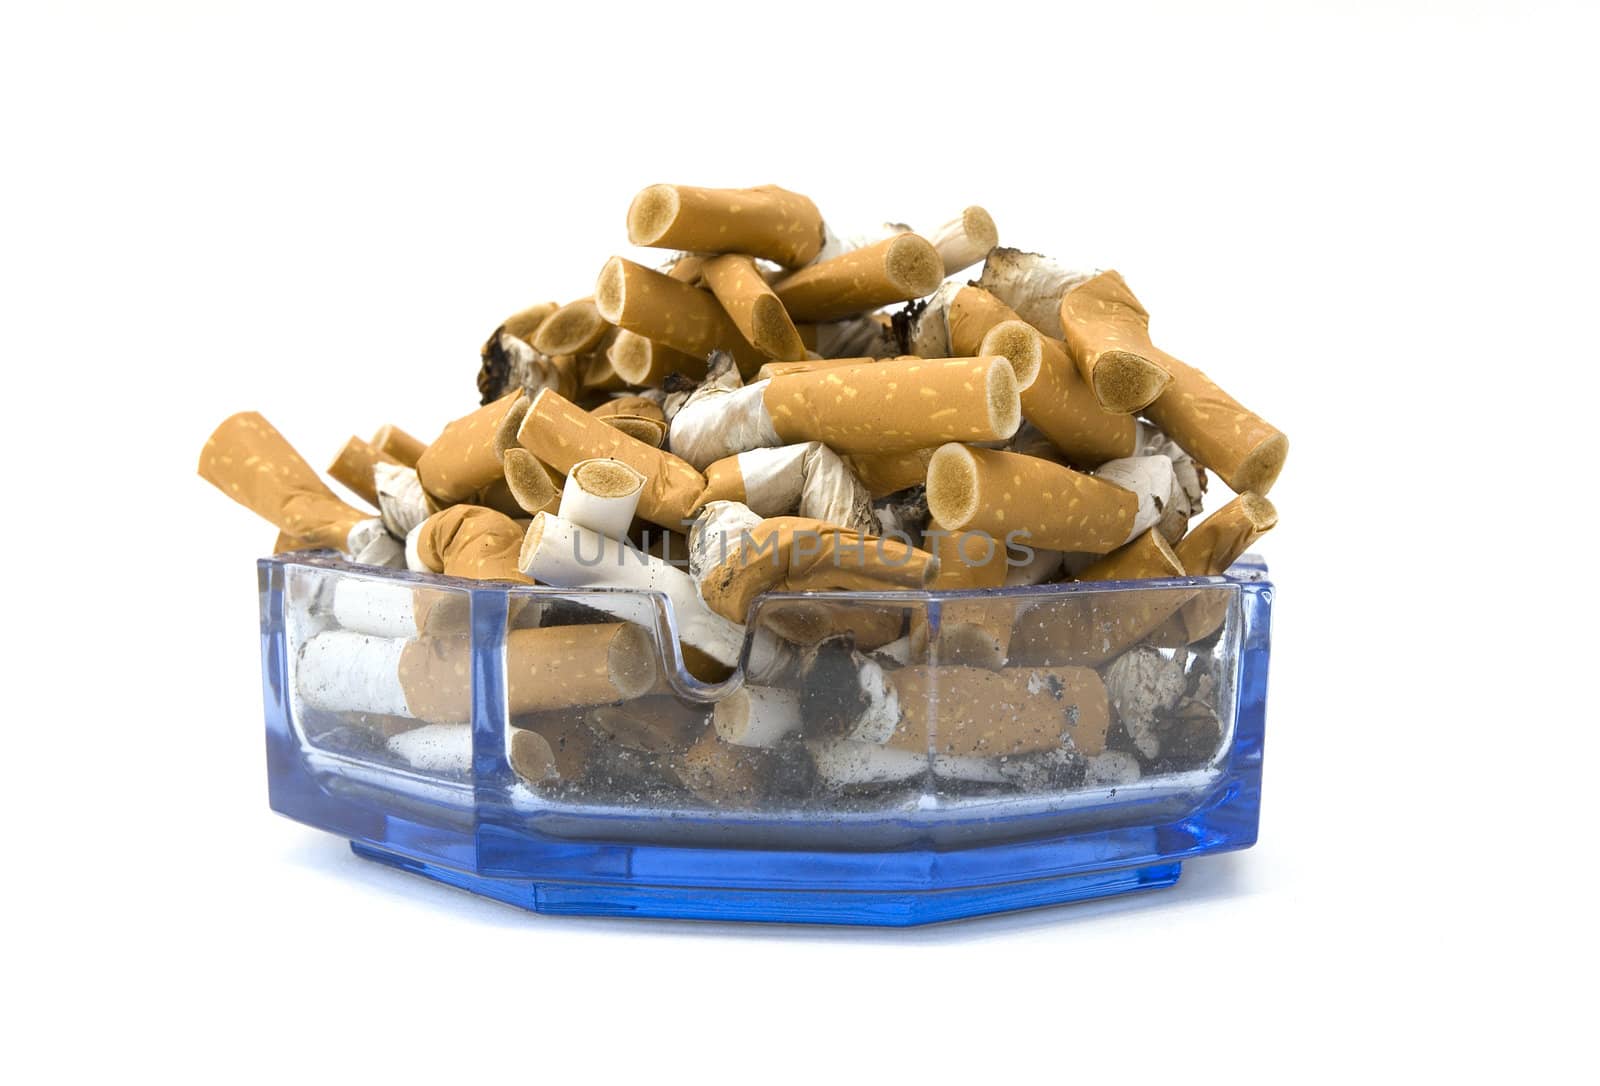 ashtray by semenovp